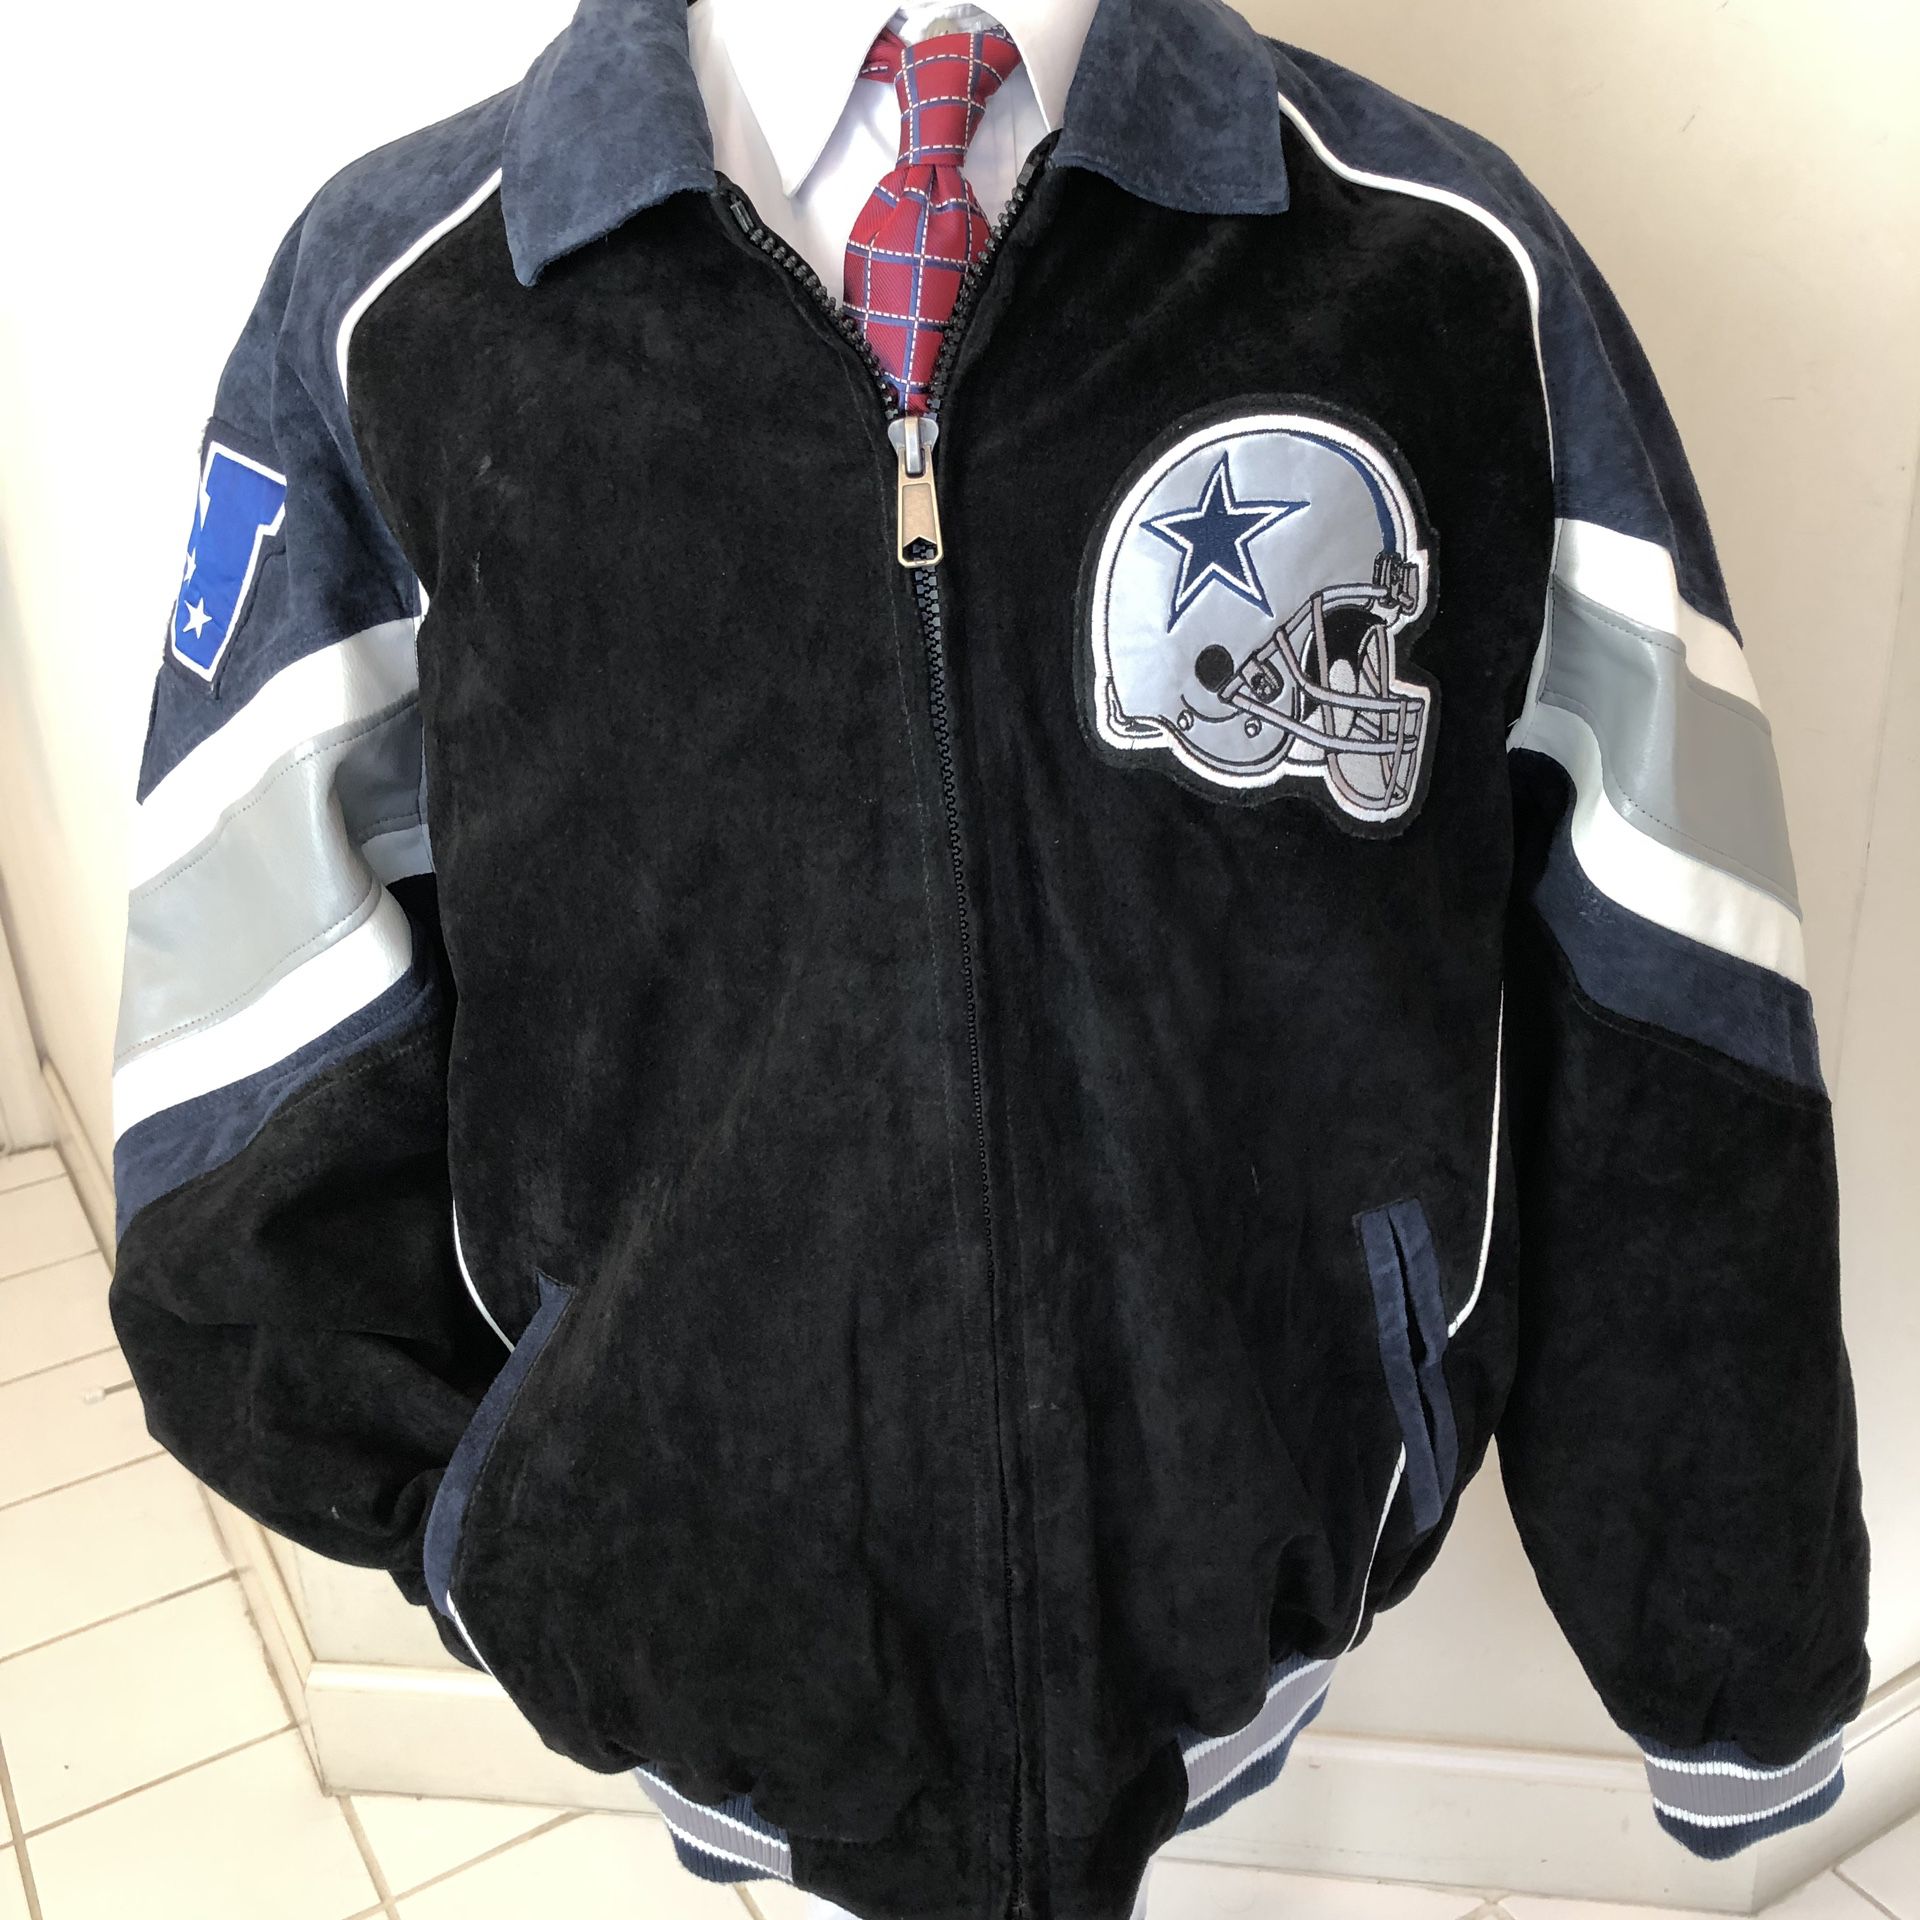 MINT! Dallas Cowboys Suede Jacket XL Black/Blue/White Big Star